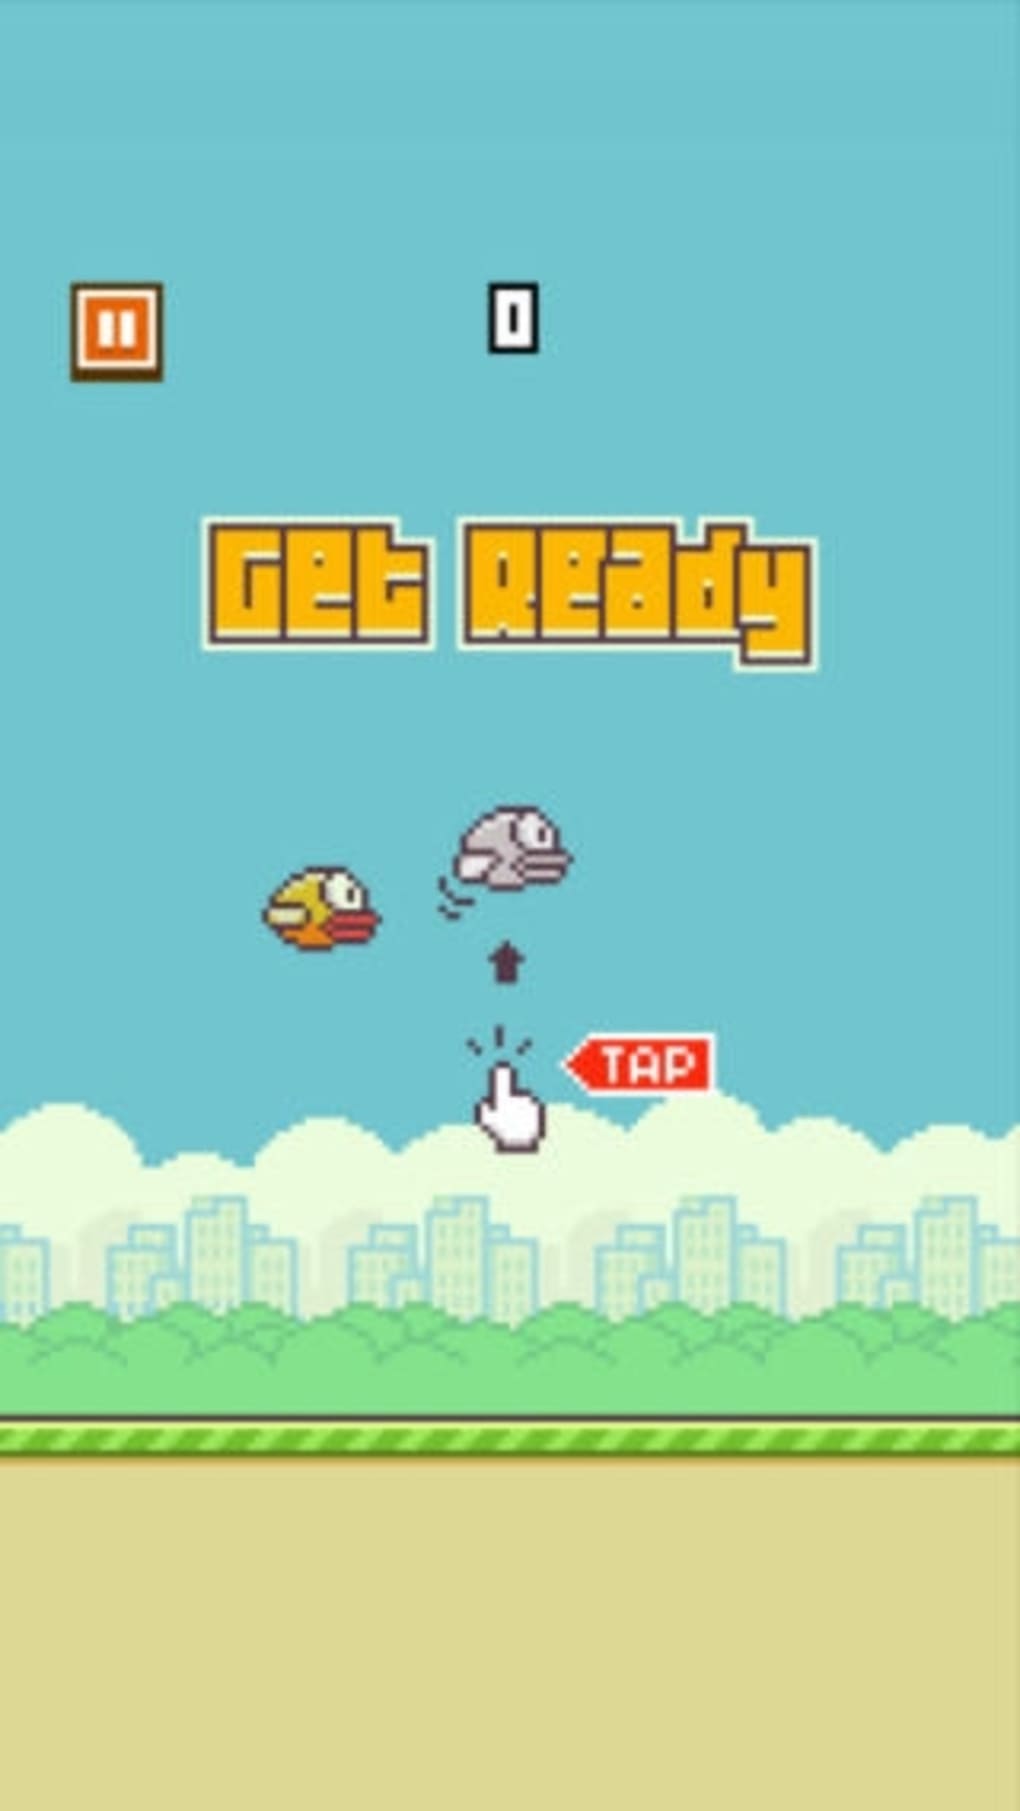 Download do APK de Flappy Bird Pro para Android